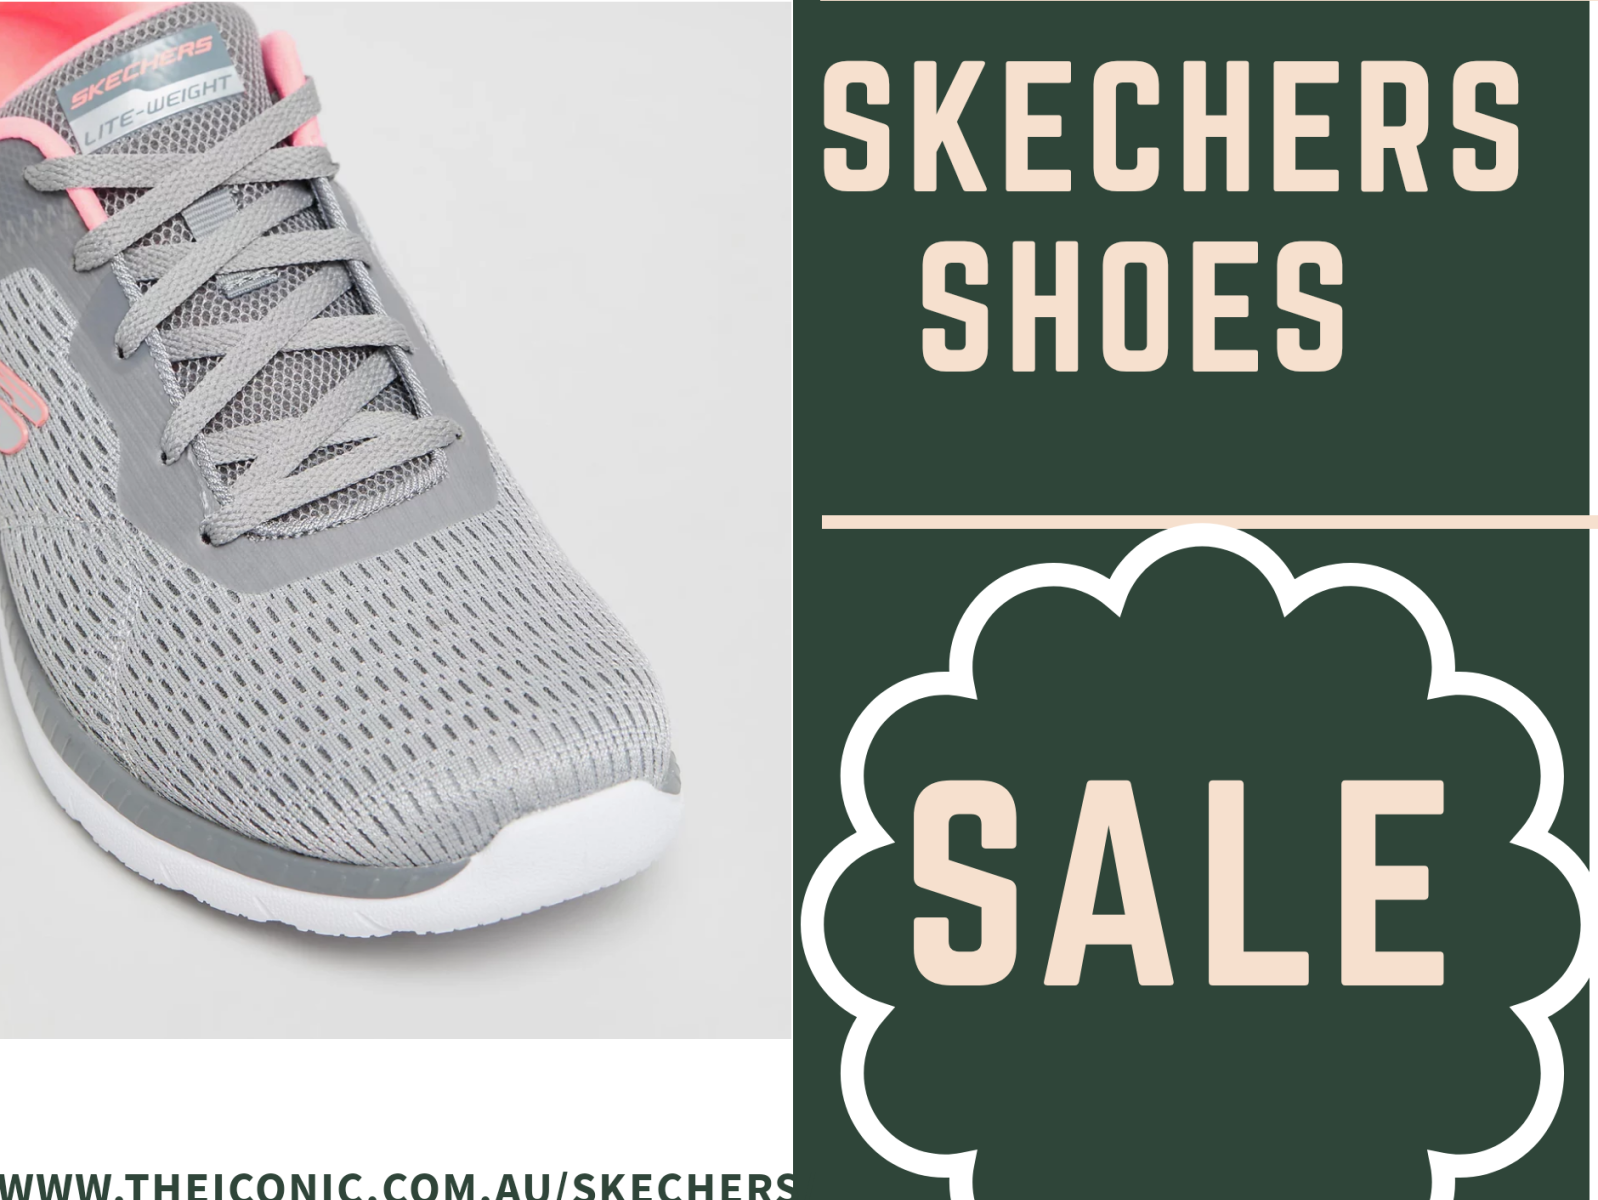 skechers shoes latest design